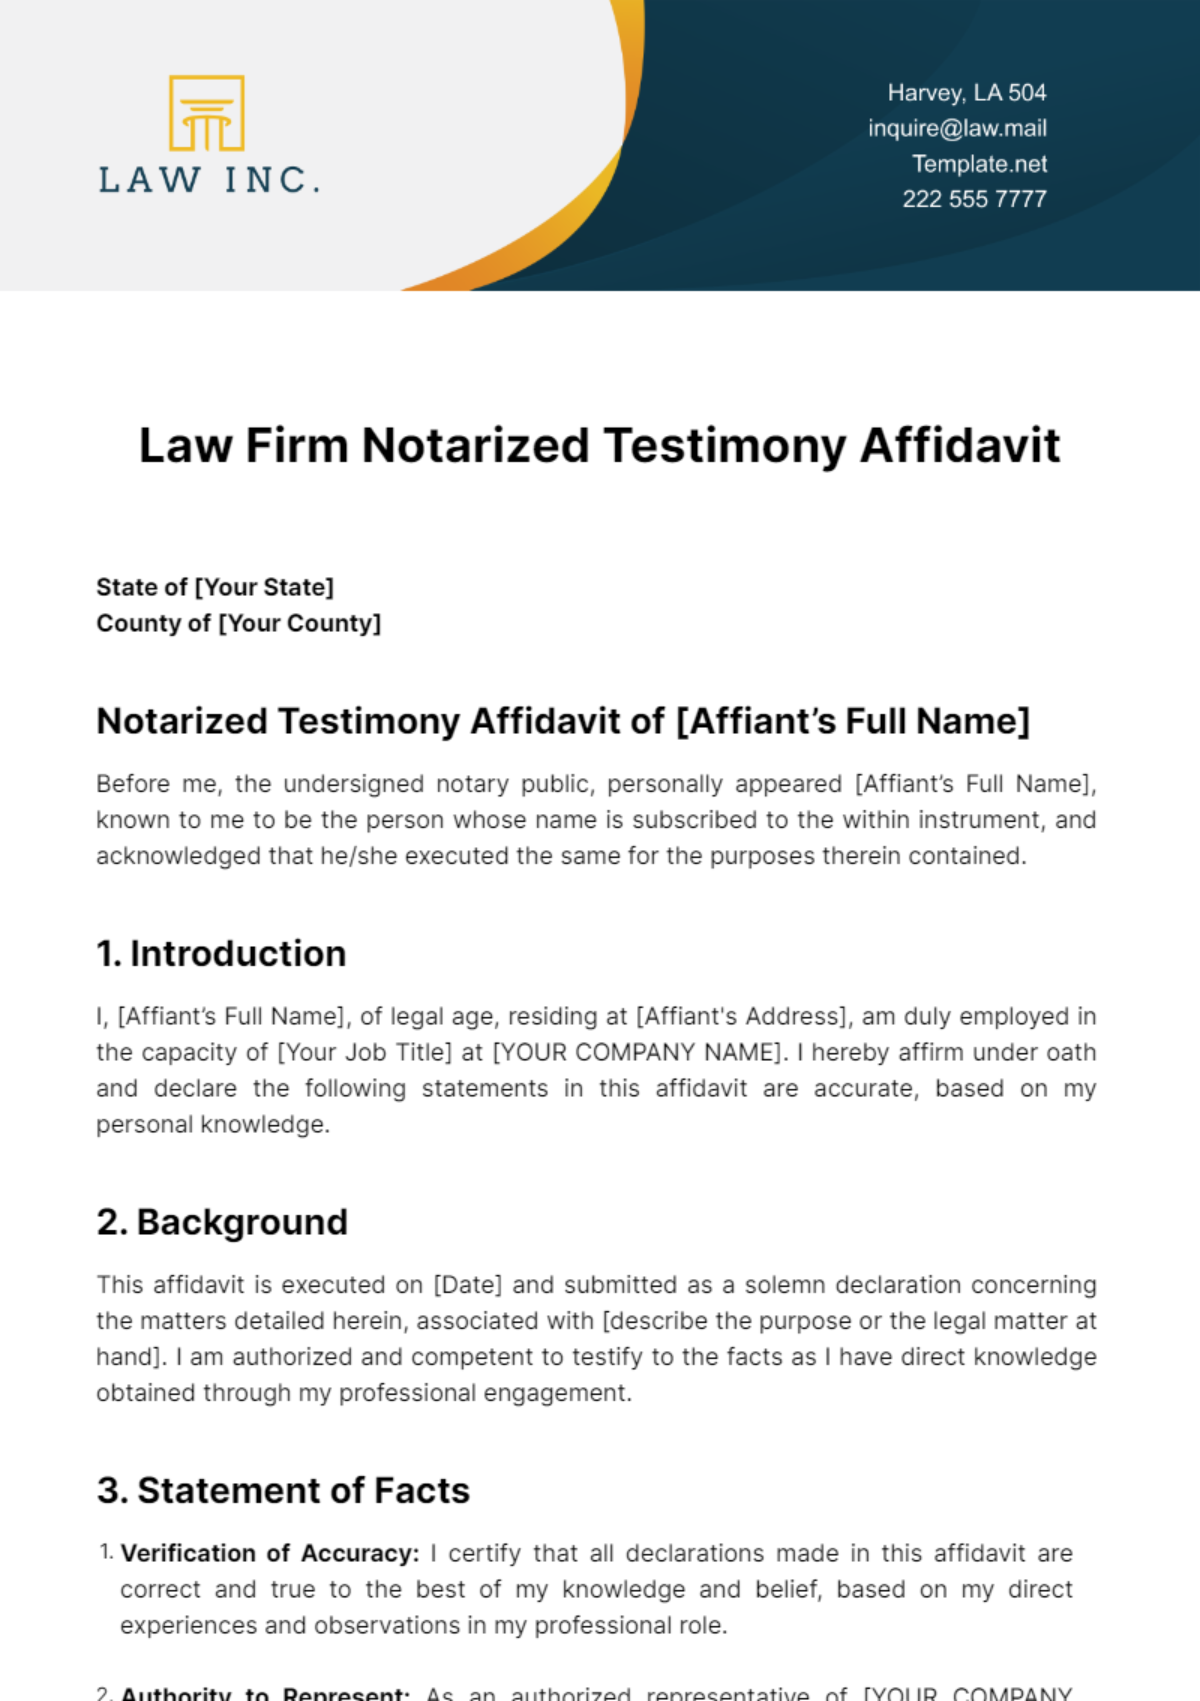 Free Law Firm Notarized Testimony Affidavit Template